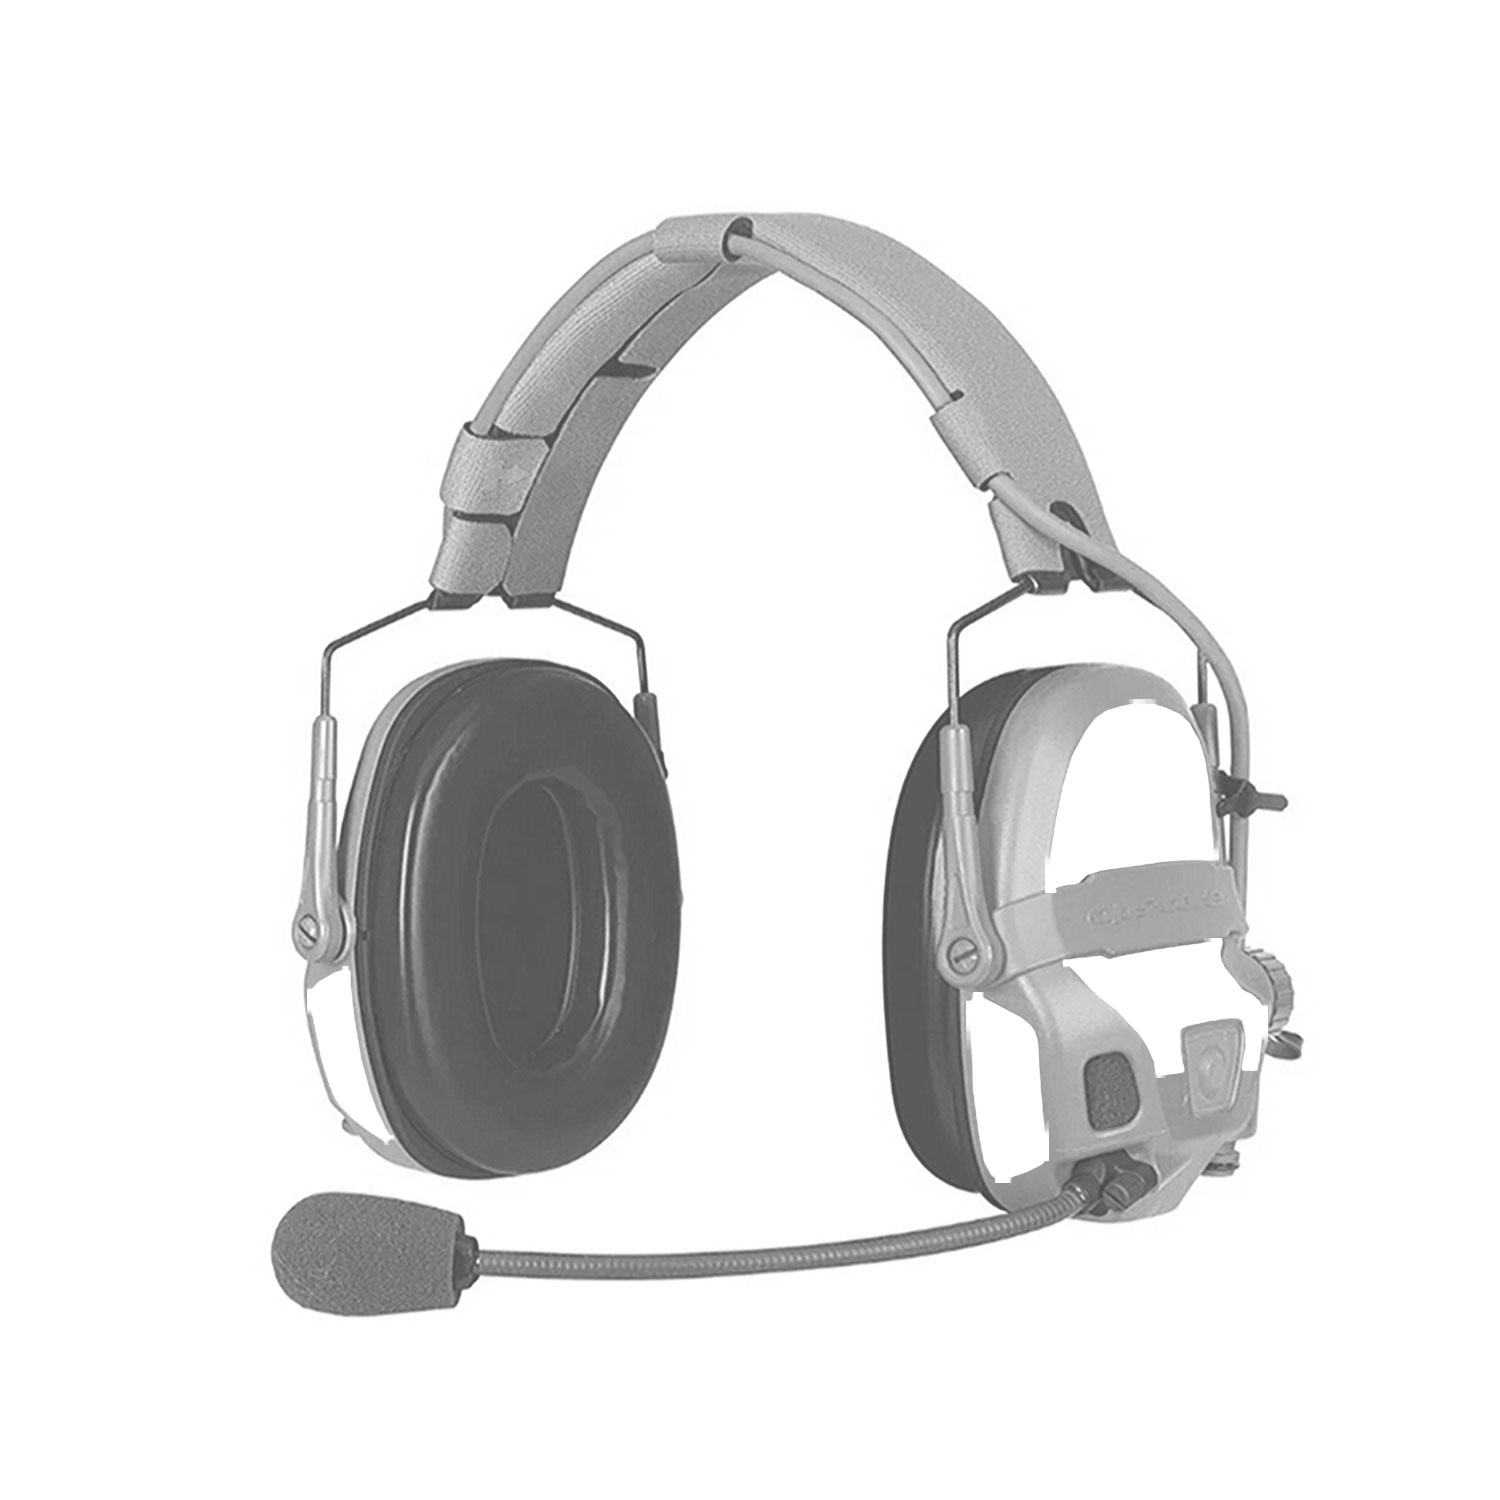 amp-headset-white-2